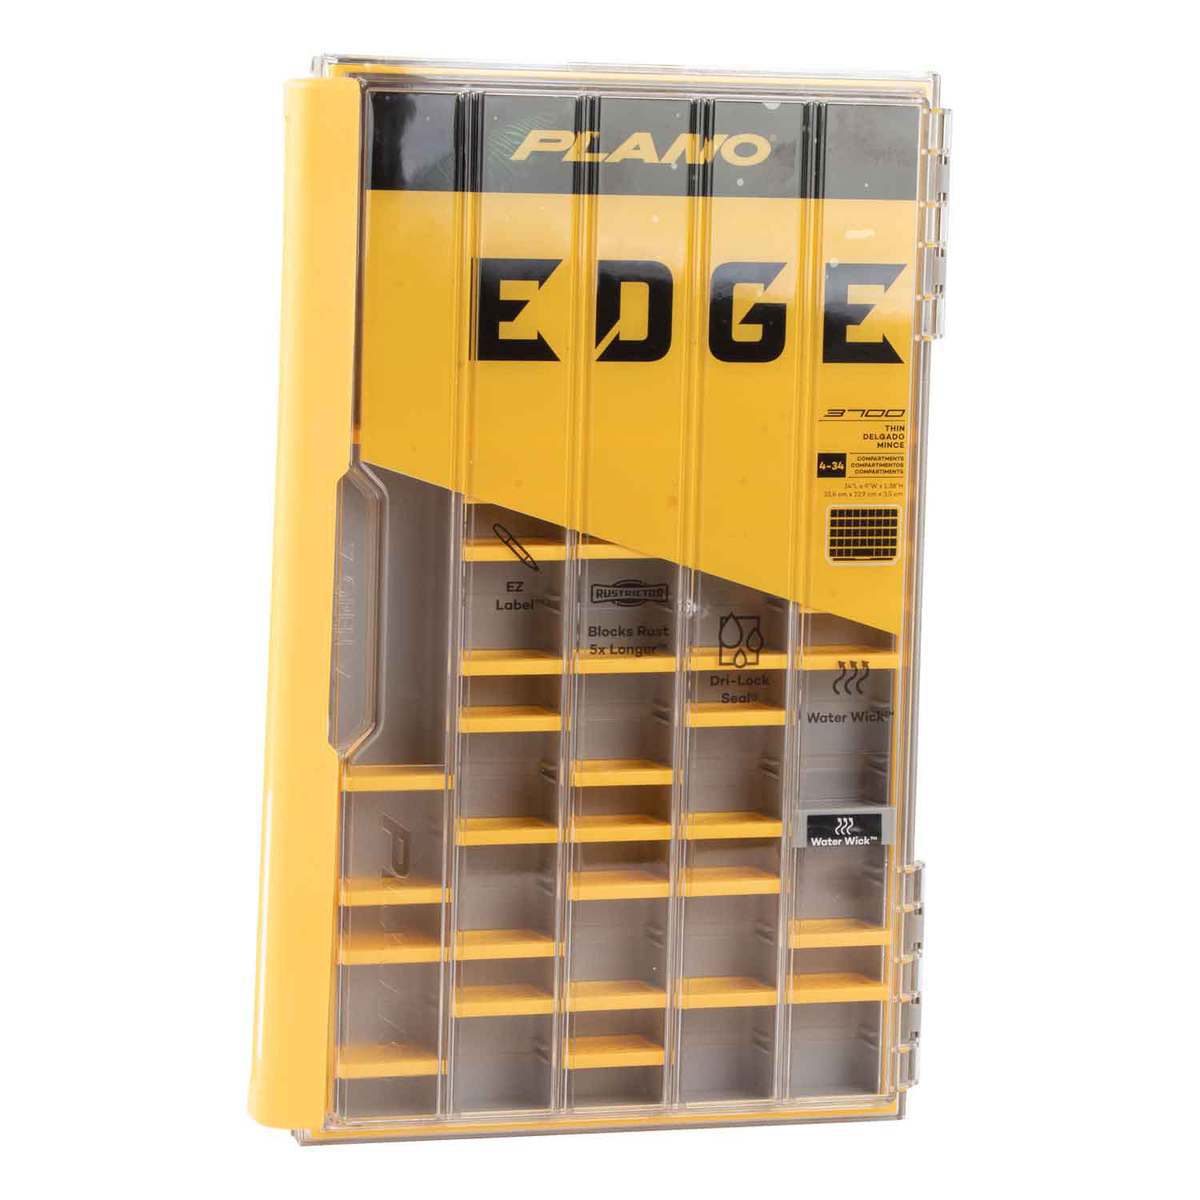 Plano Edge Utility Standard Box from